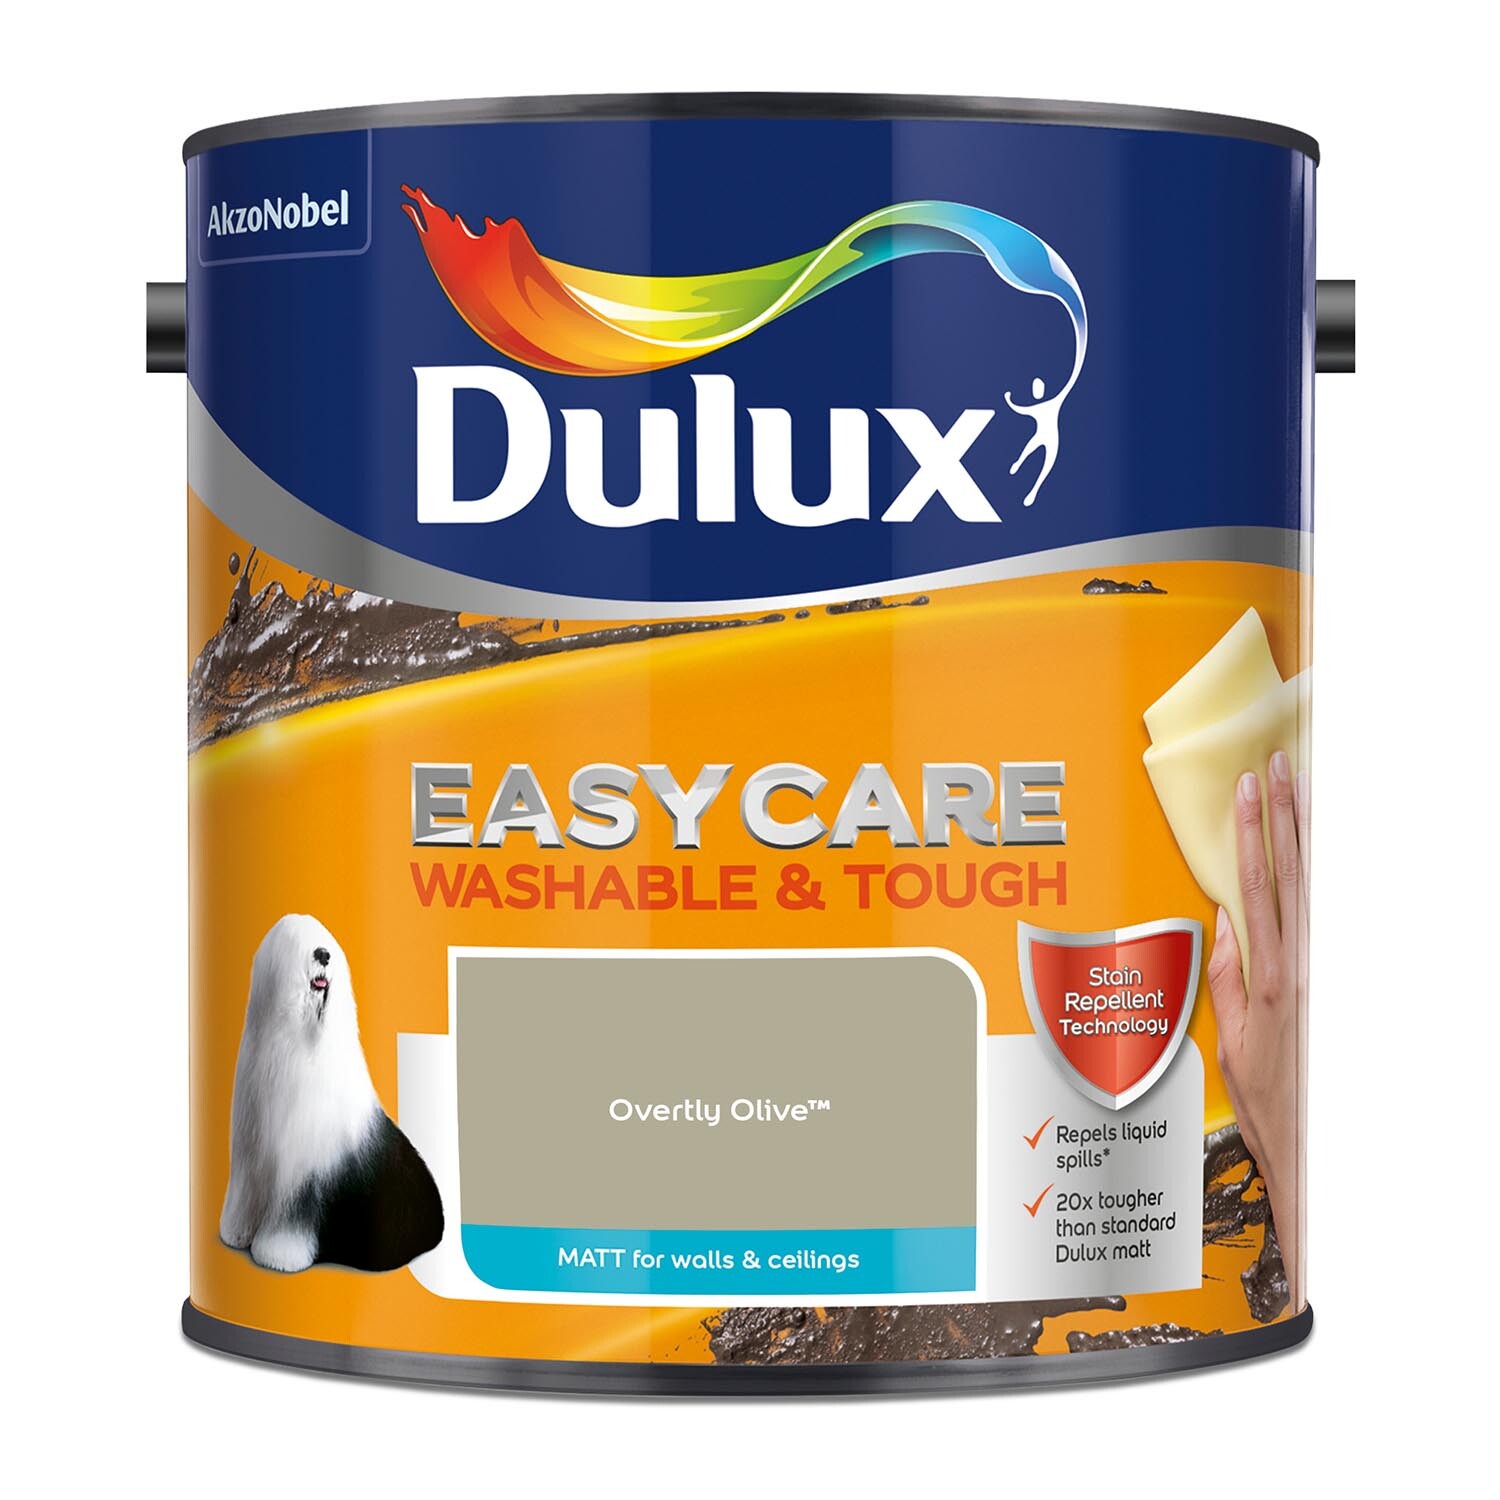 Dulux Easycare Washable and Tough Overtly Olive Matt Emulsion Paint Image 2